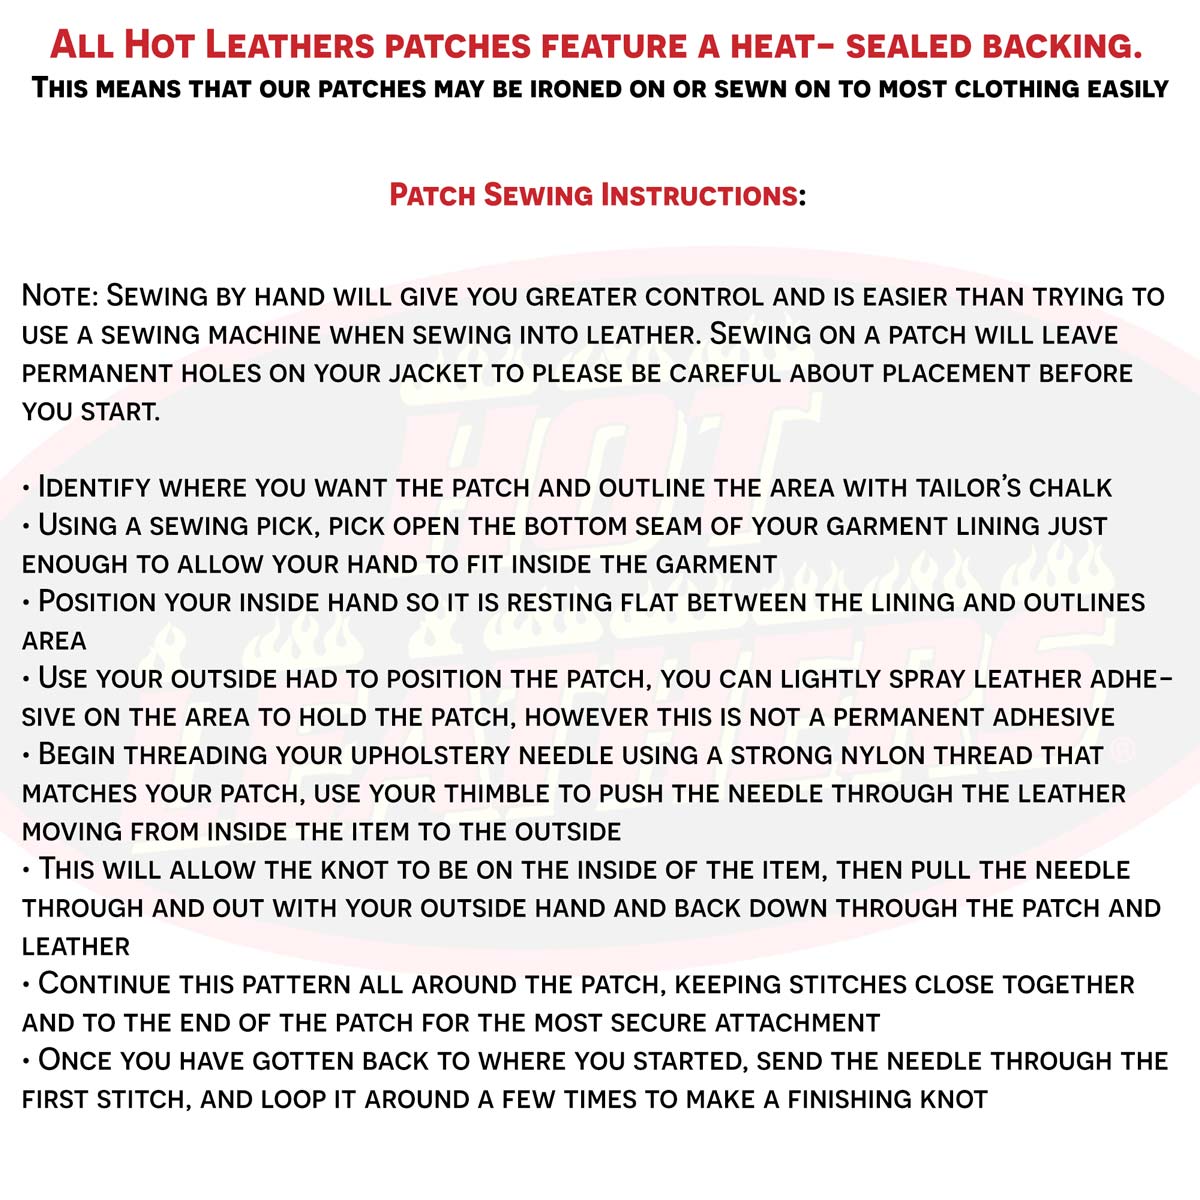 Hot Leathers PPM2003 Desert Storm Vet Banner 11" x 3" Patch